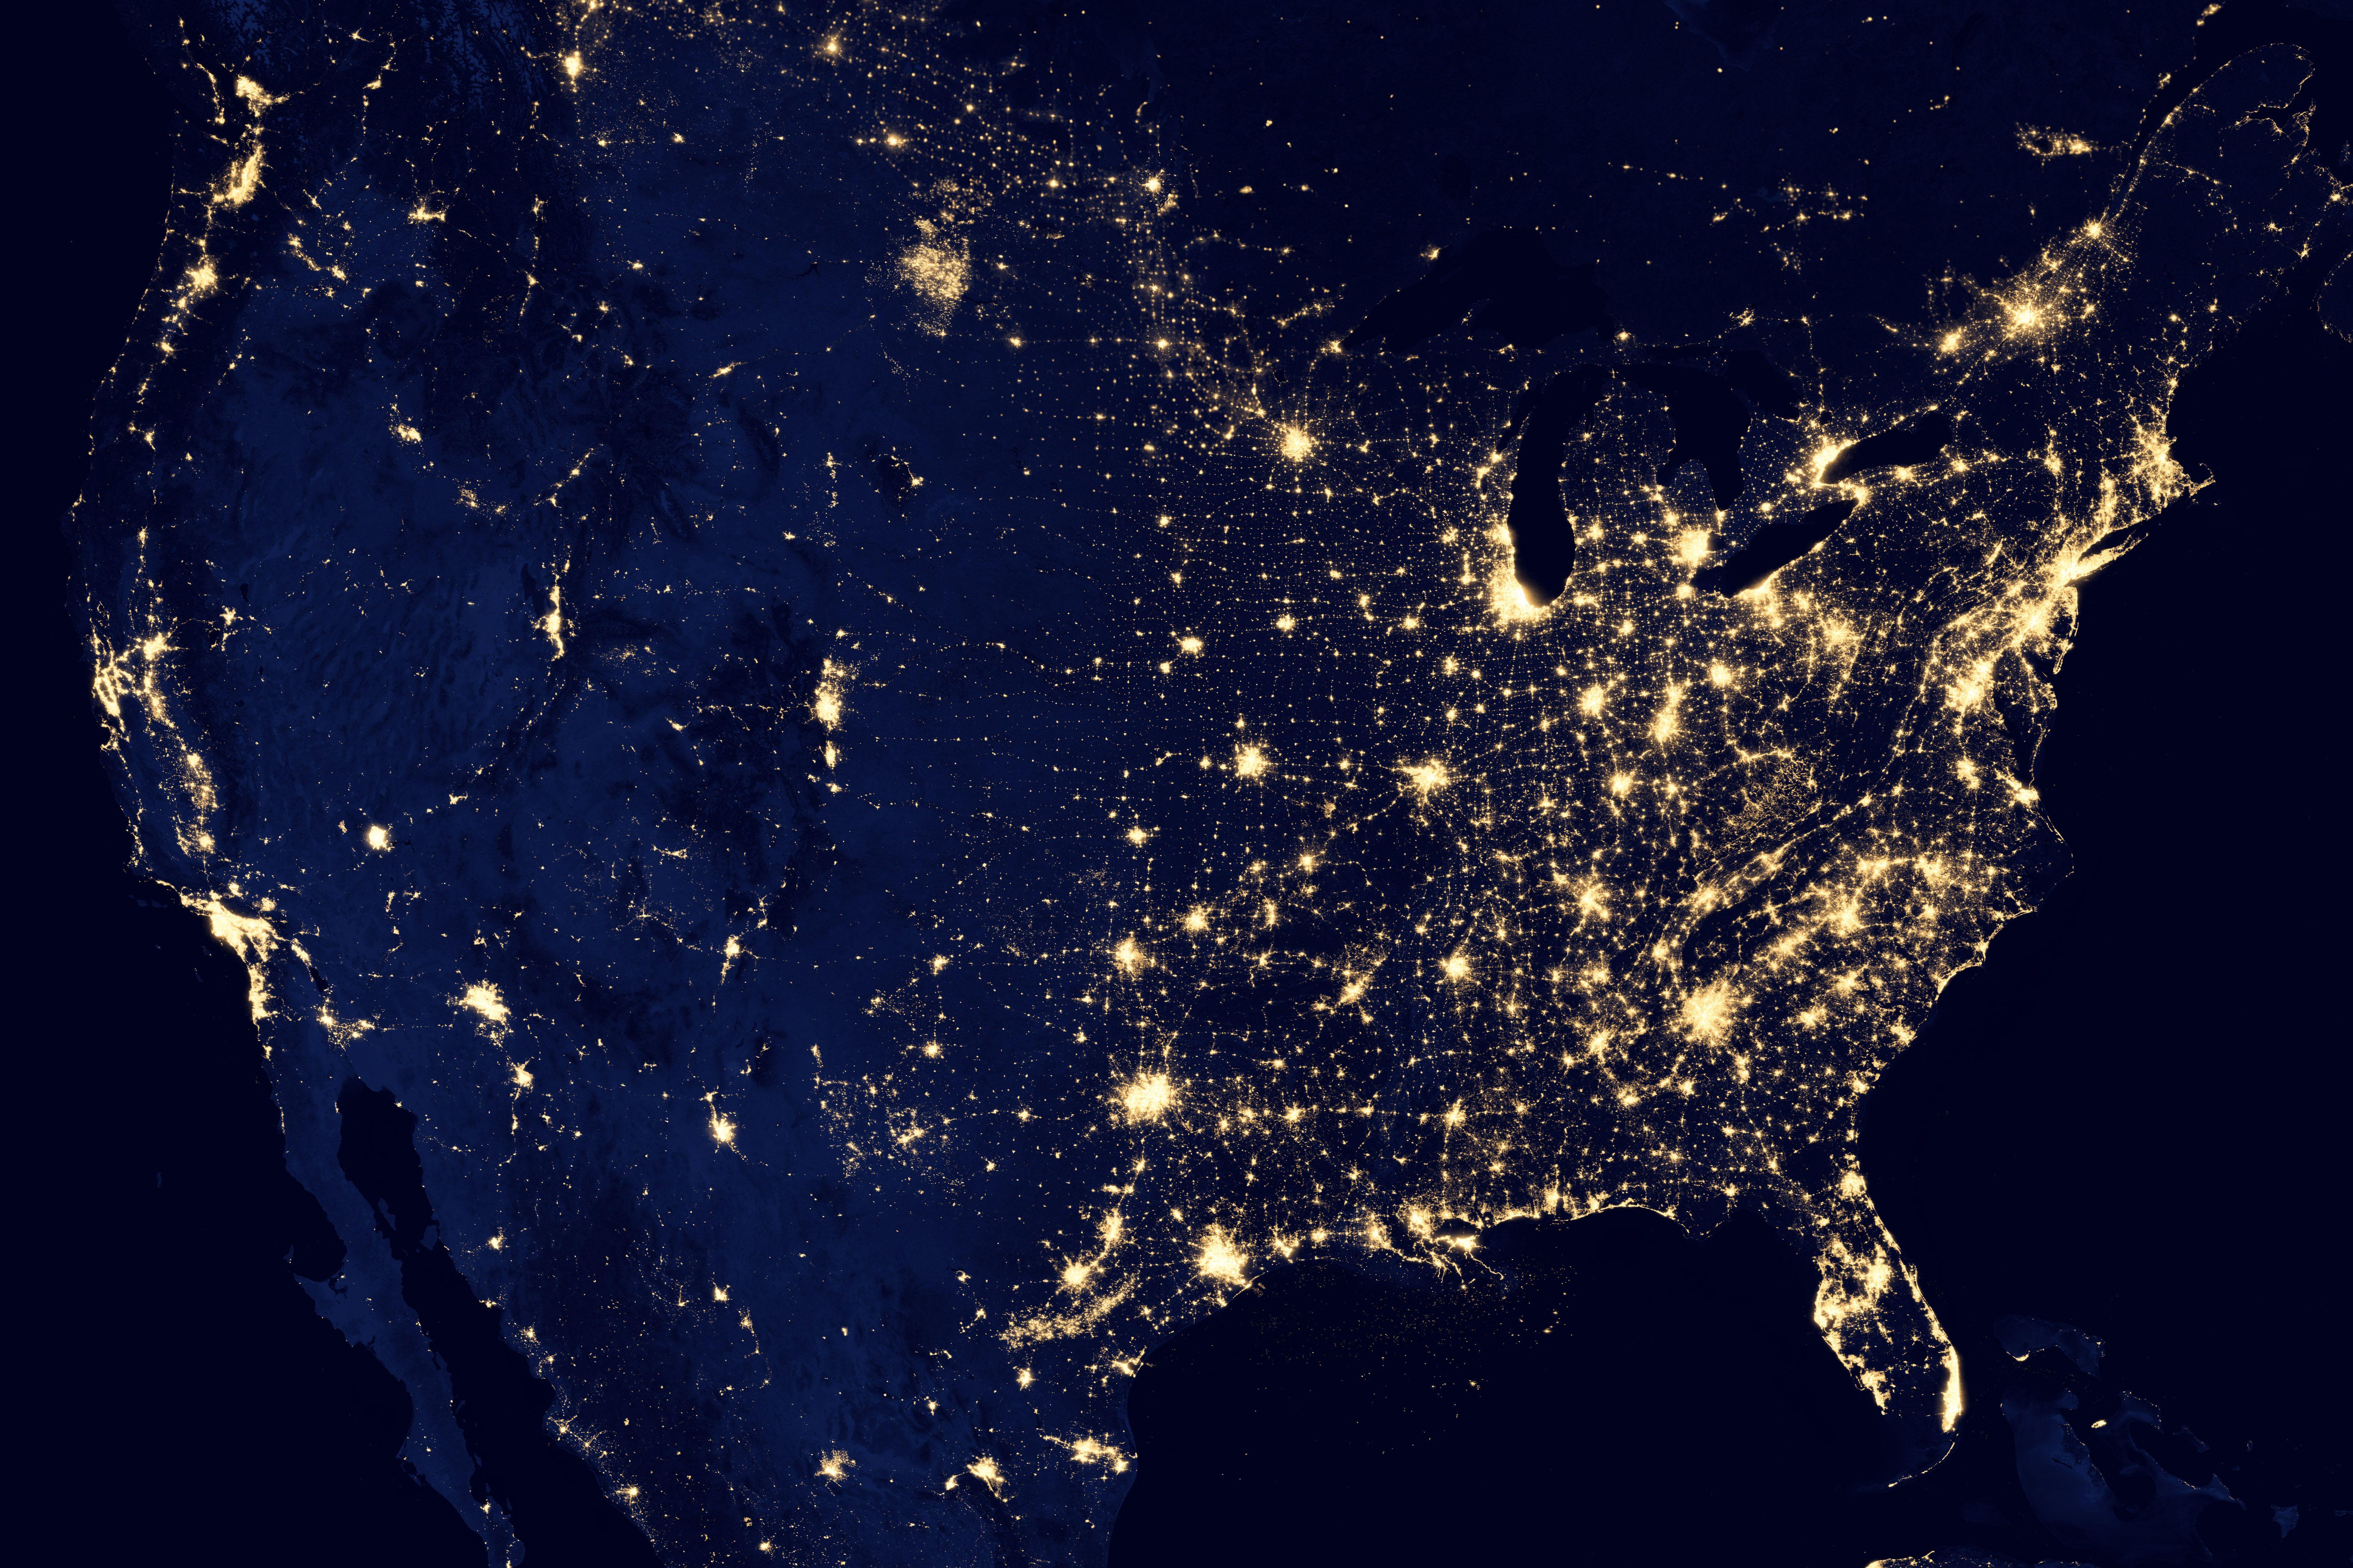 NASA NOAA Satellite Reveals New Views Of Earth At Night